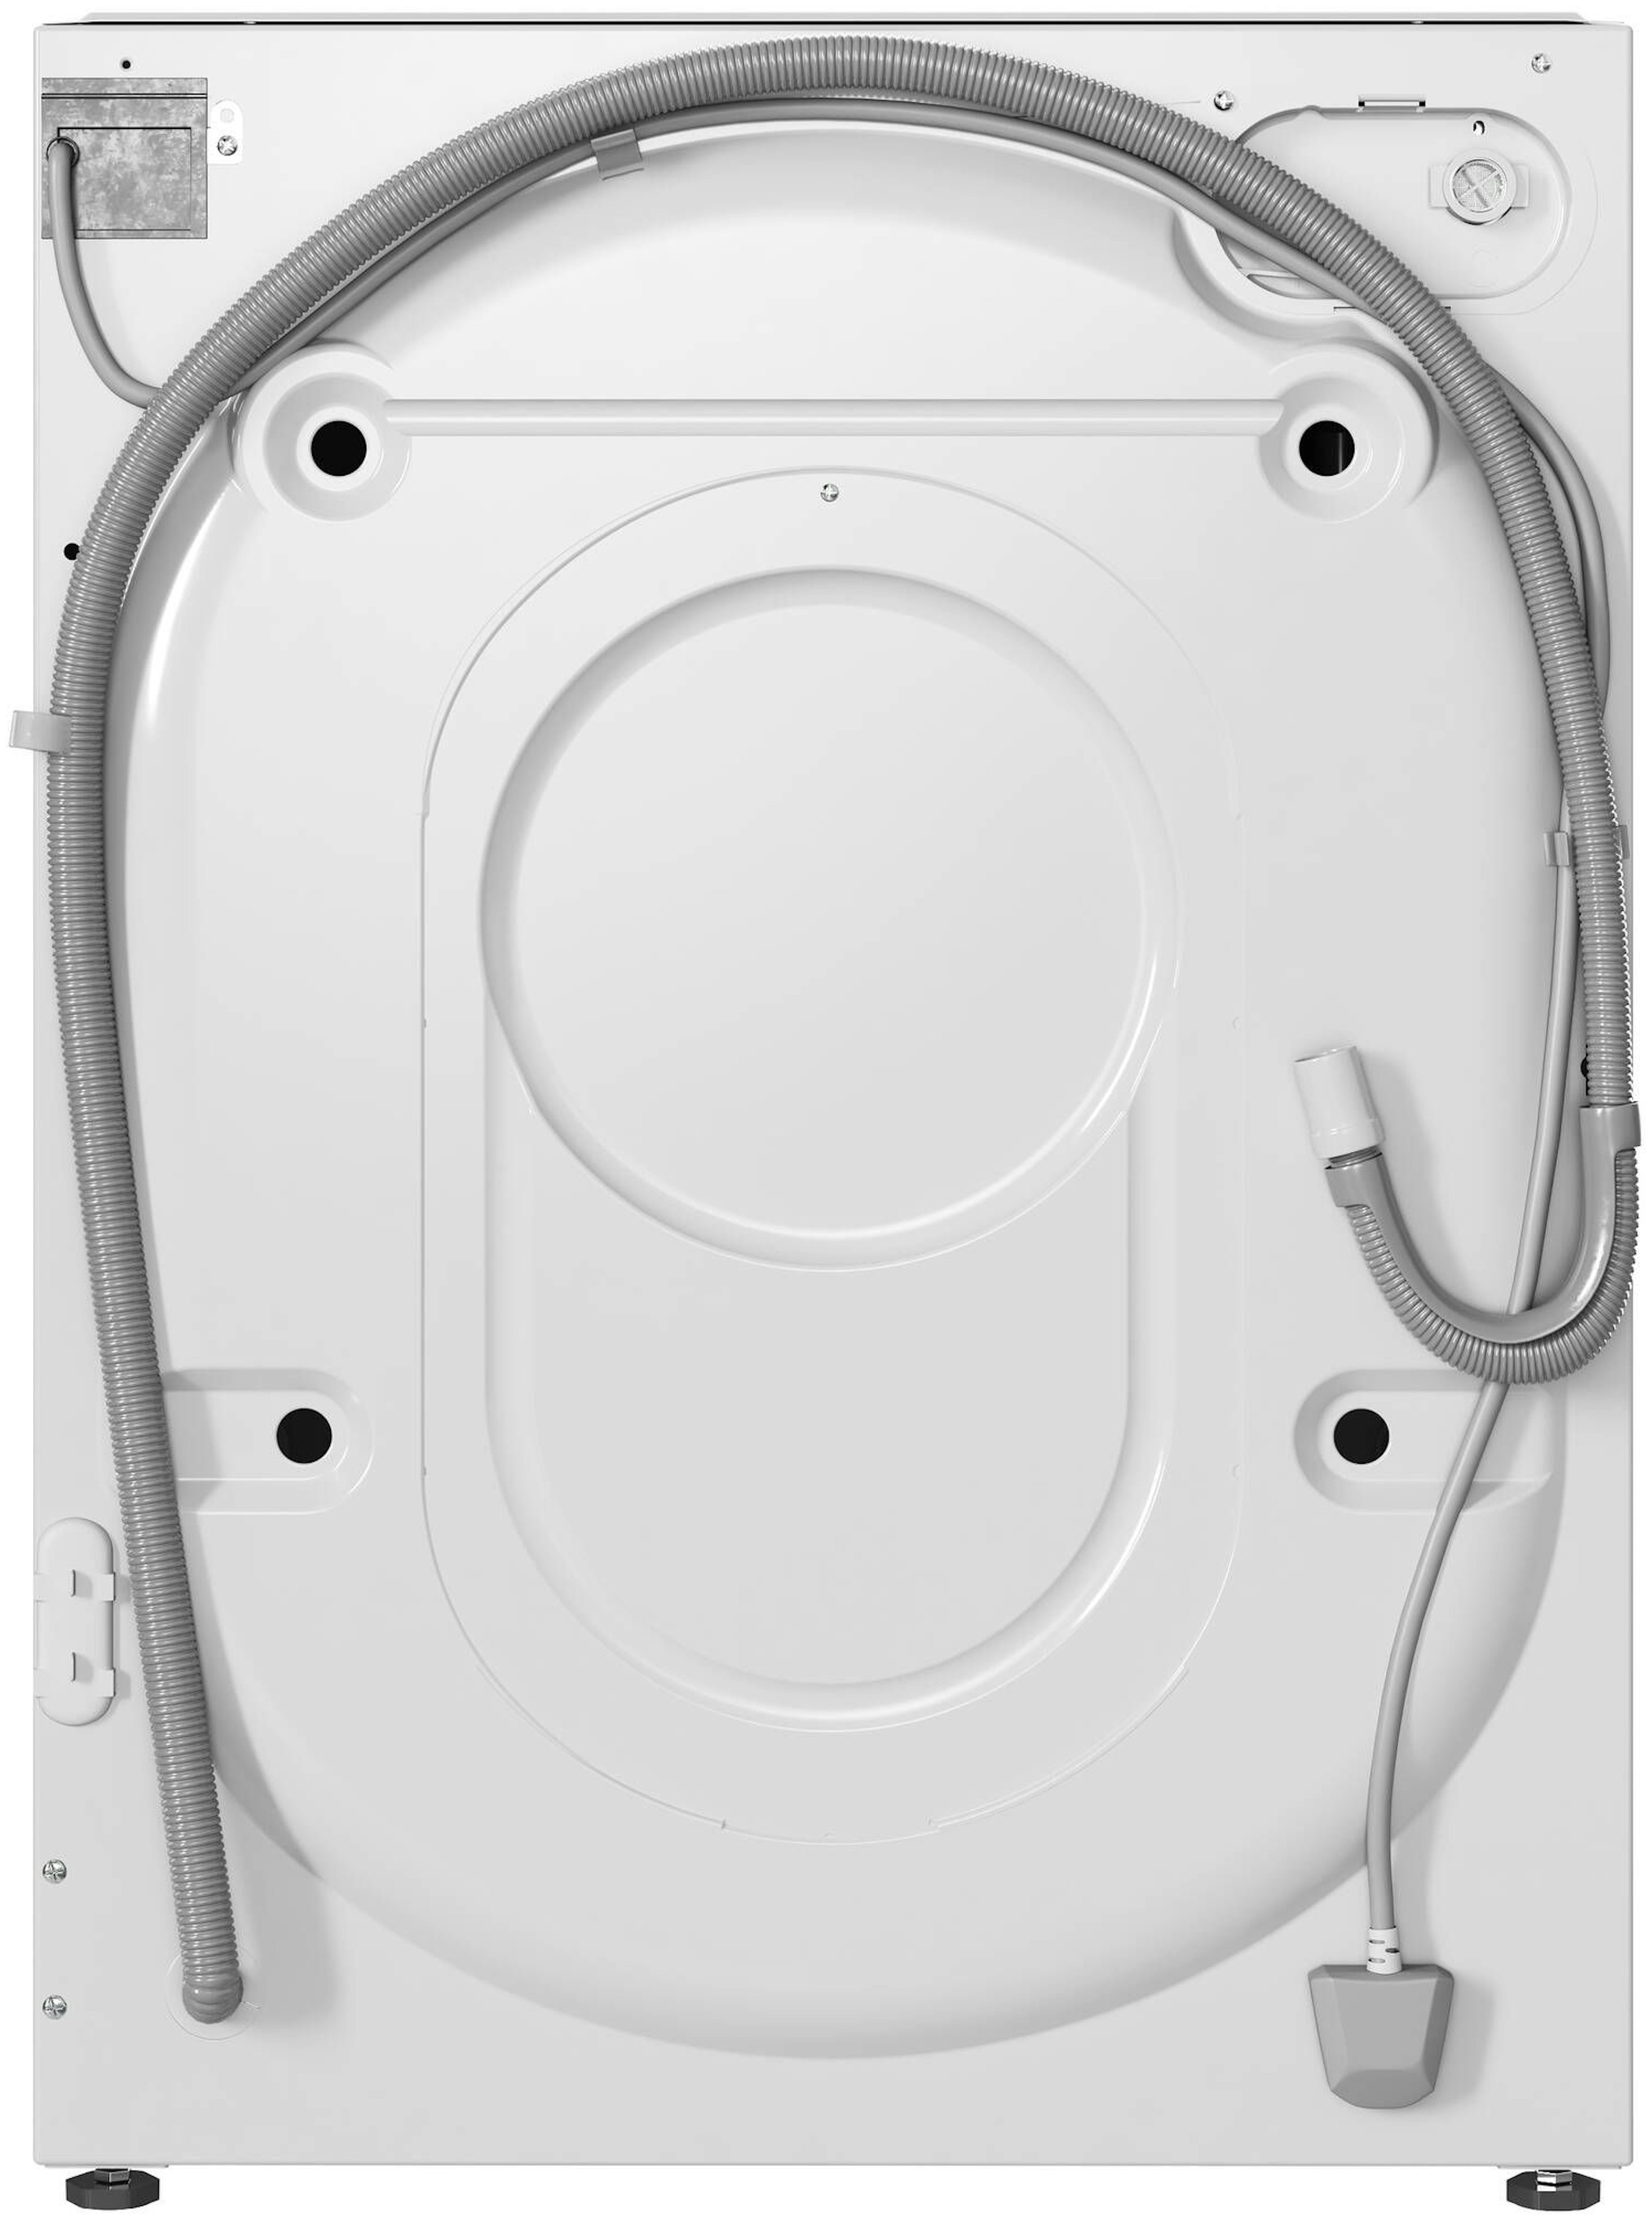 Whirlpool BIWDWG961485EU inbouw wasmachine afbeelding 6